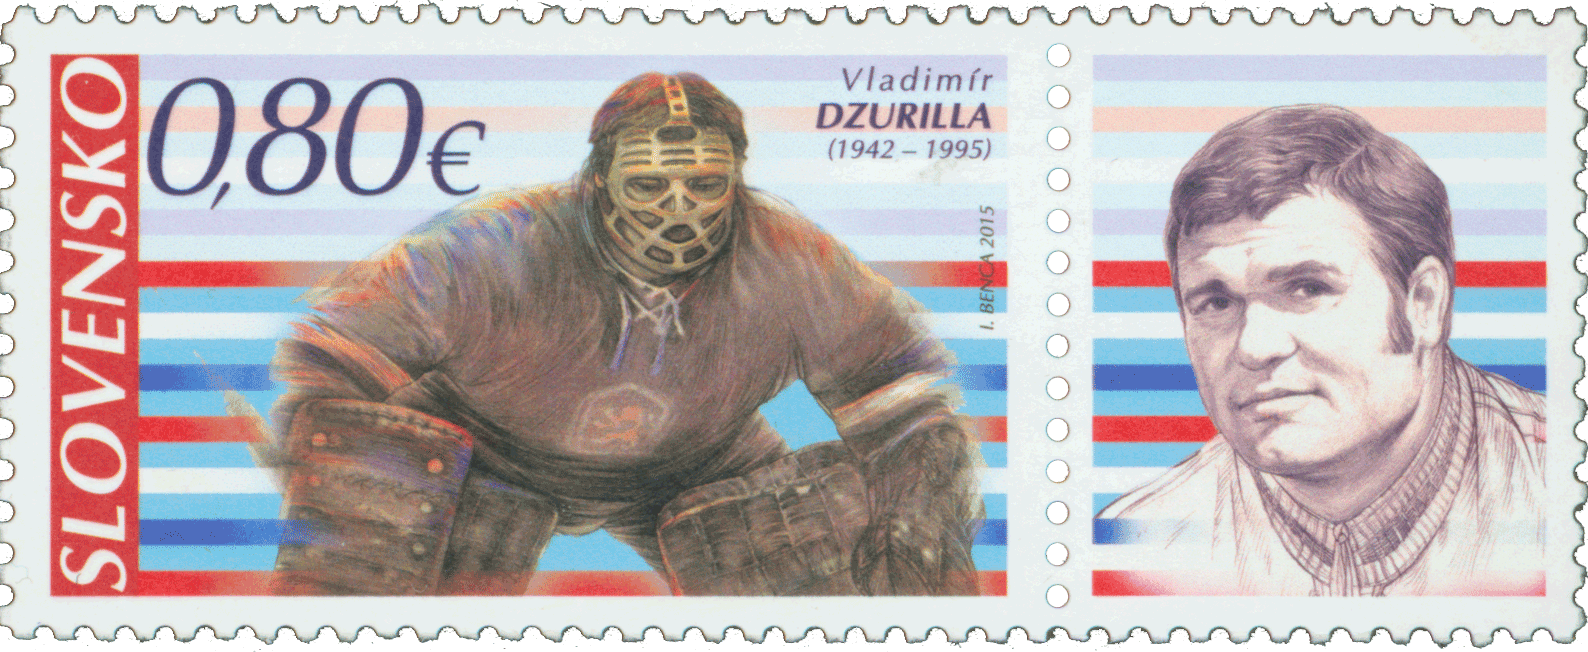 585 - Šport: Vladimír Dzurilla (1942 – 1995)